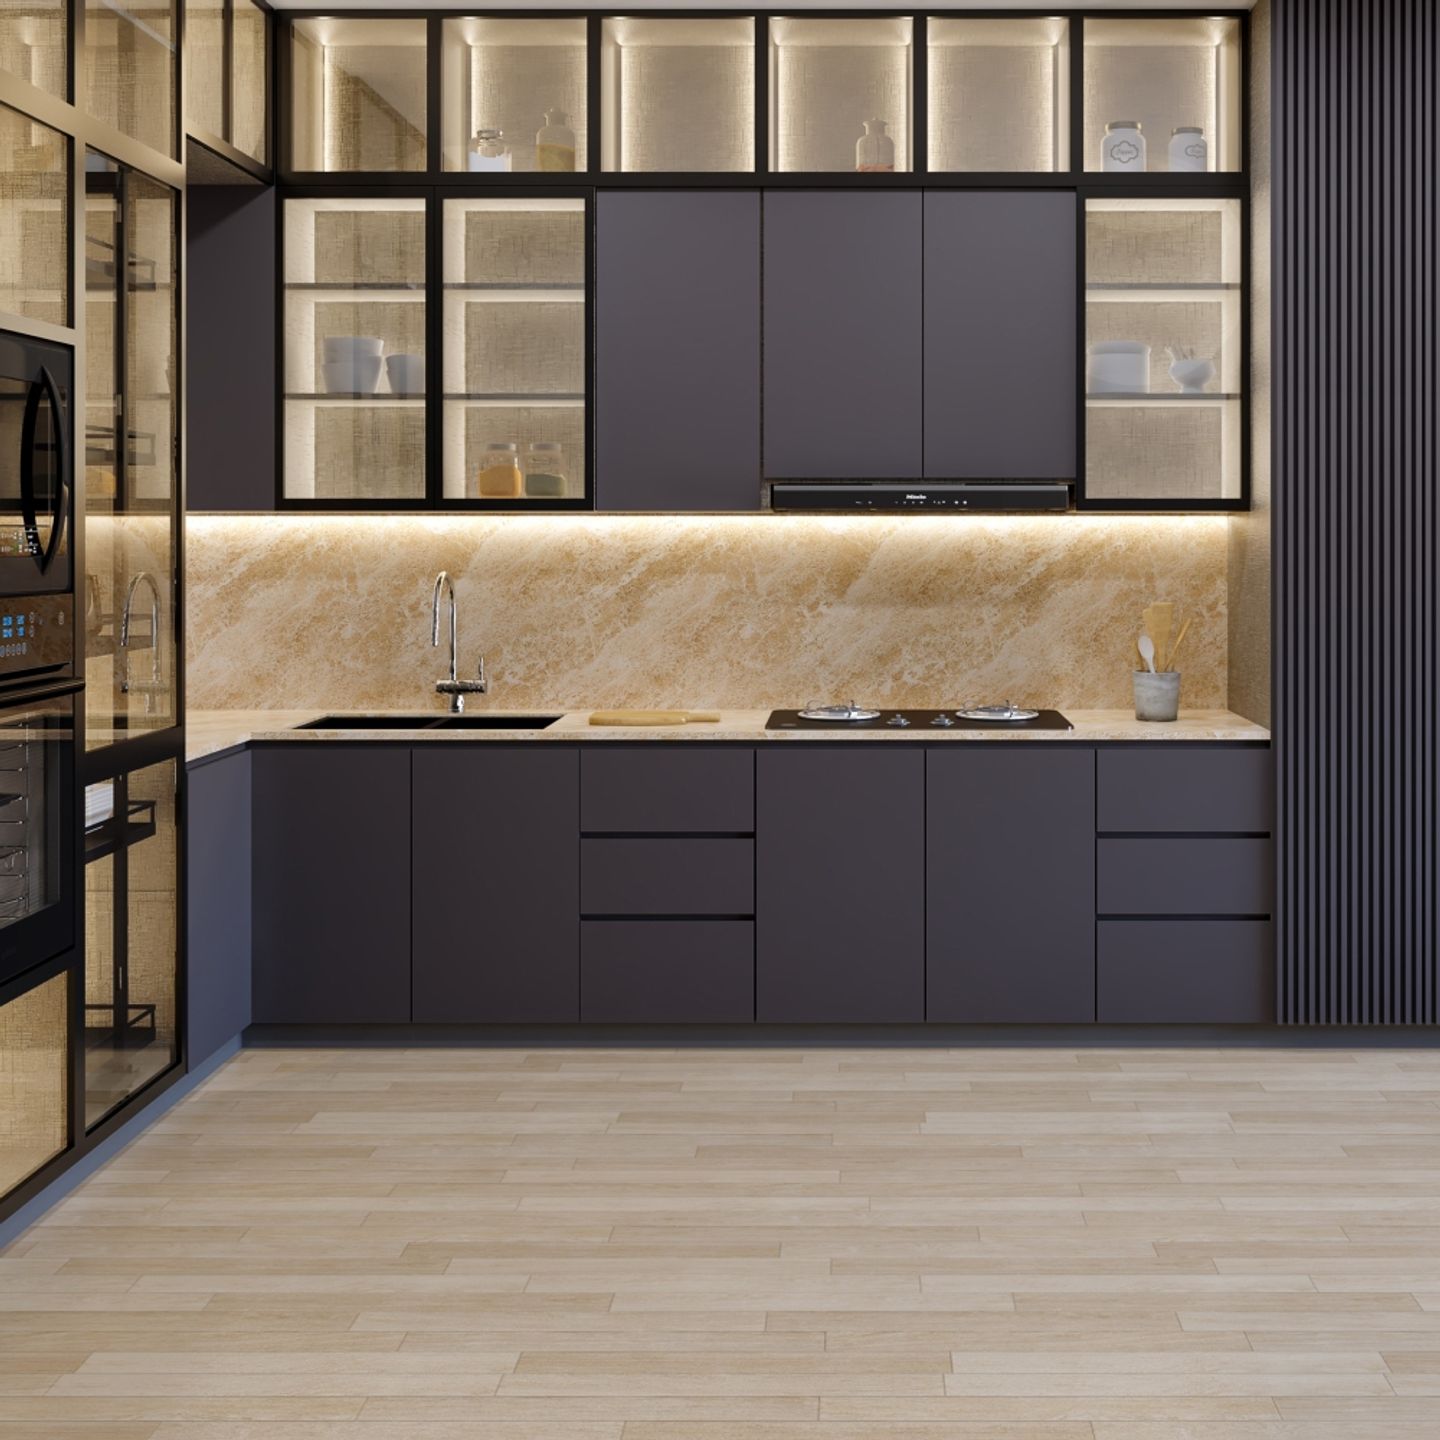 Light Brown Matte-Finish Flooring Design - 24x6 inches | Livspace